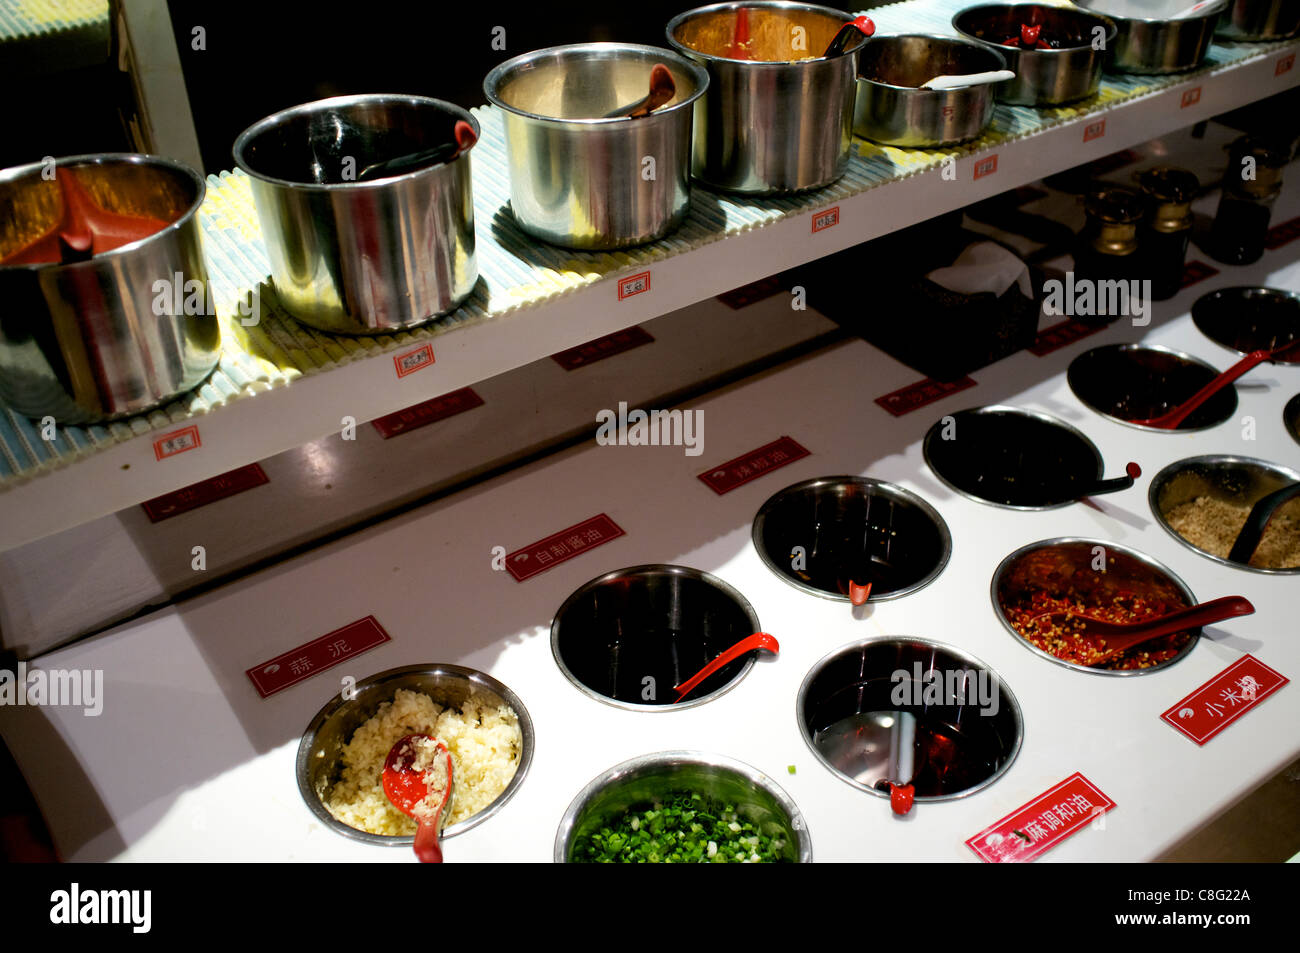 https://c8.alamy.com/comp/C8G22A/various-sauces-at-hai-di-lao-hot-pot-restaurant-in-beijing-china-21-C8G22A.jpg